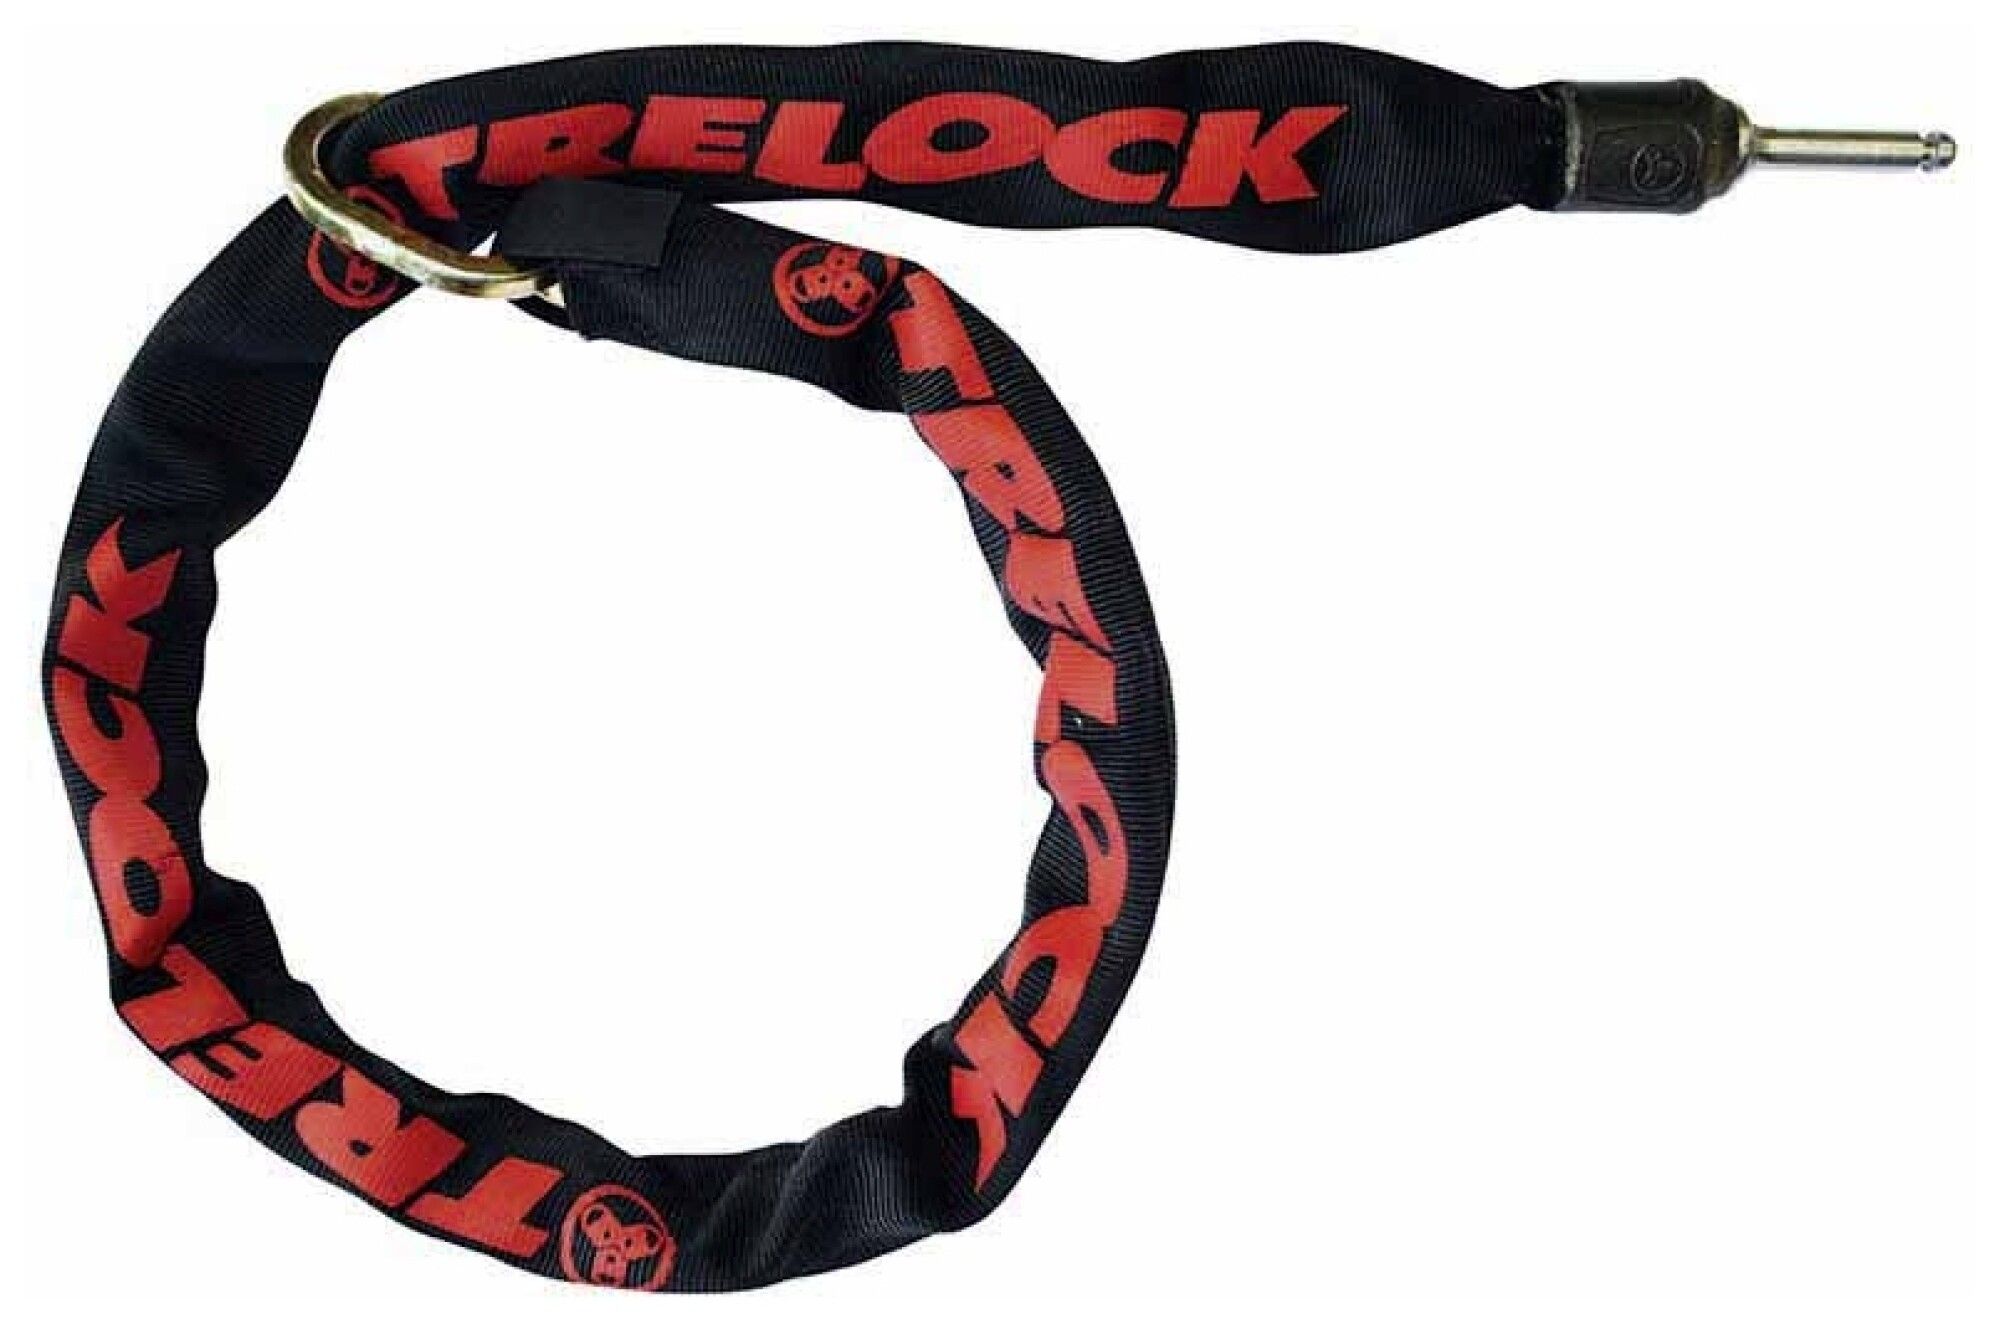 Trelock ZR 455/140 mit Tasche / incl. bag (Bild 2)